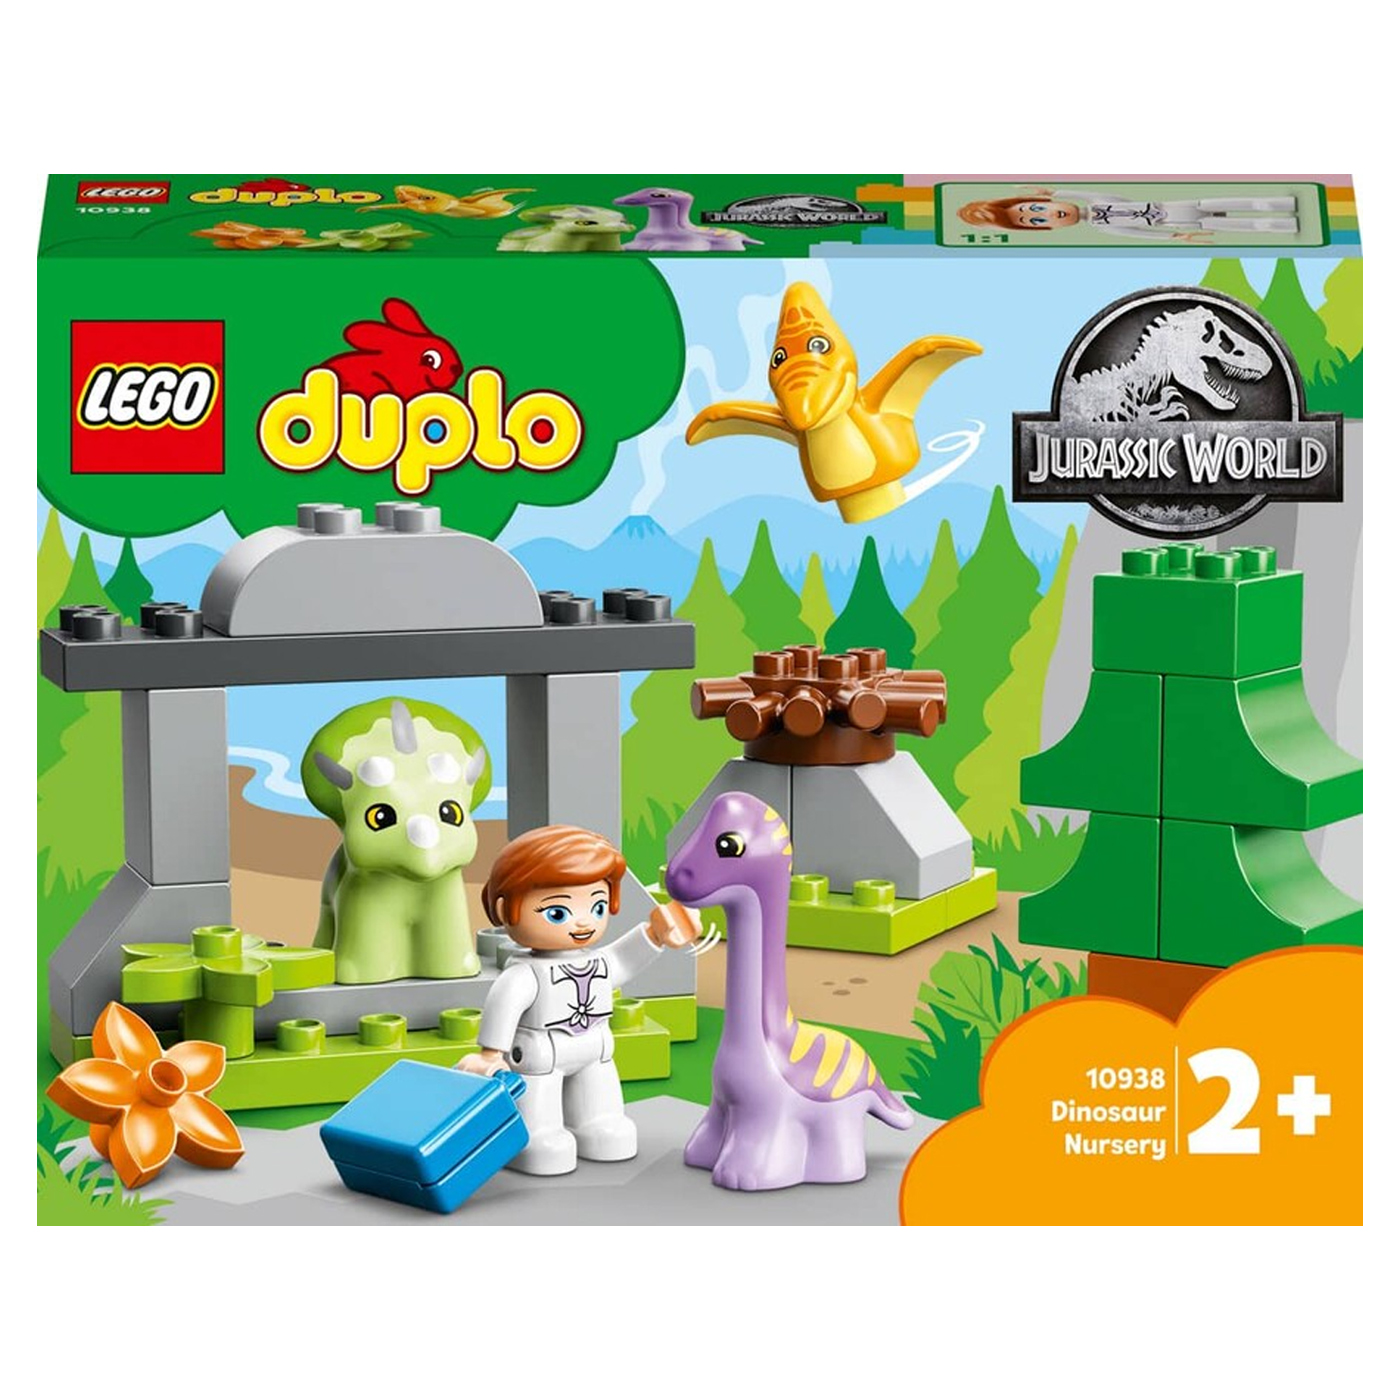  Lego Duplo Jurassic World